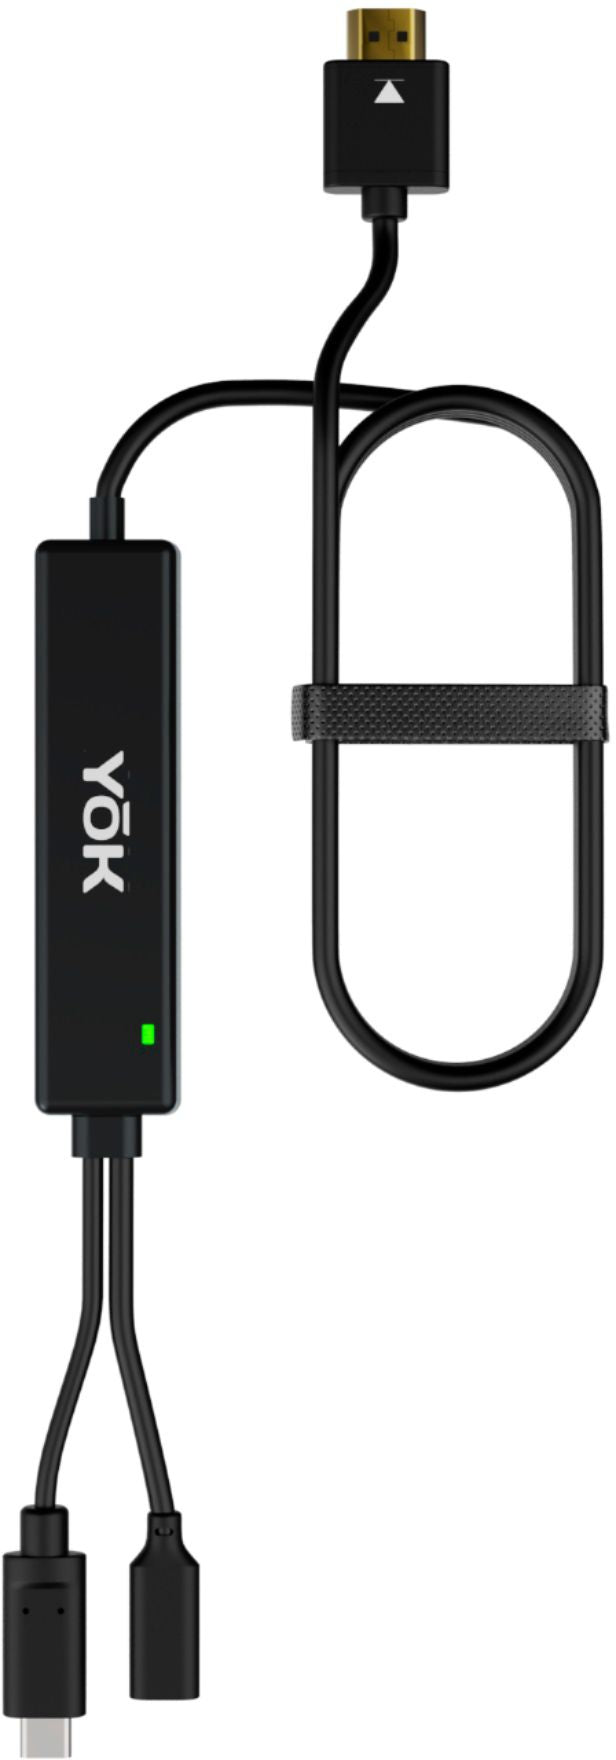 Yok - EB779 Portable TV Dock - Black